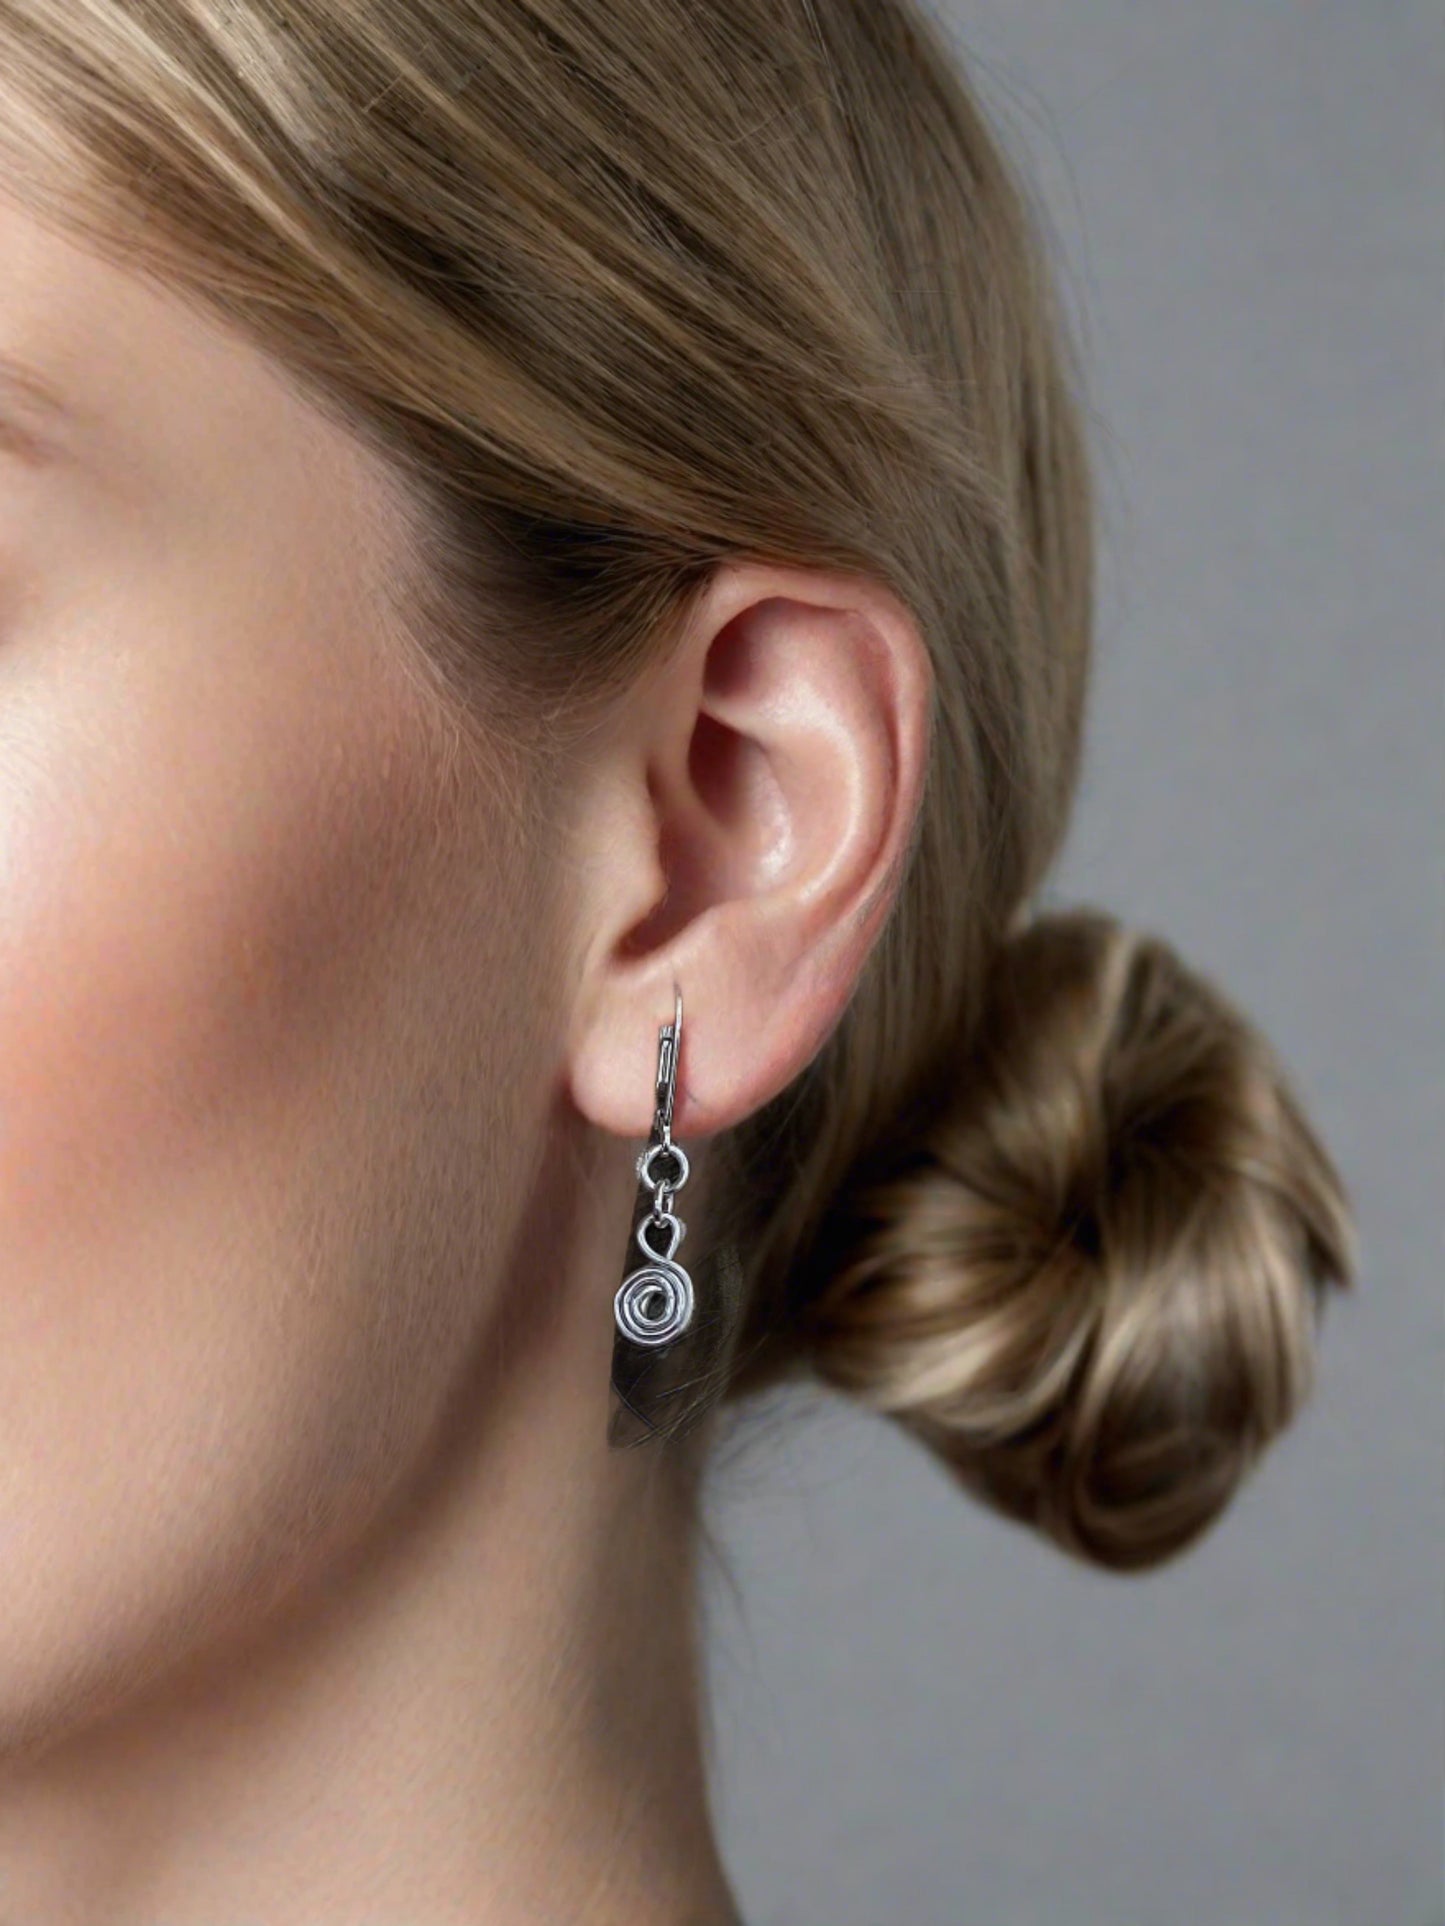 Gratitude Symbol Earrings - Lightweight & Meaningful Daily Jewelry